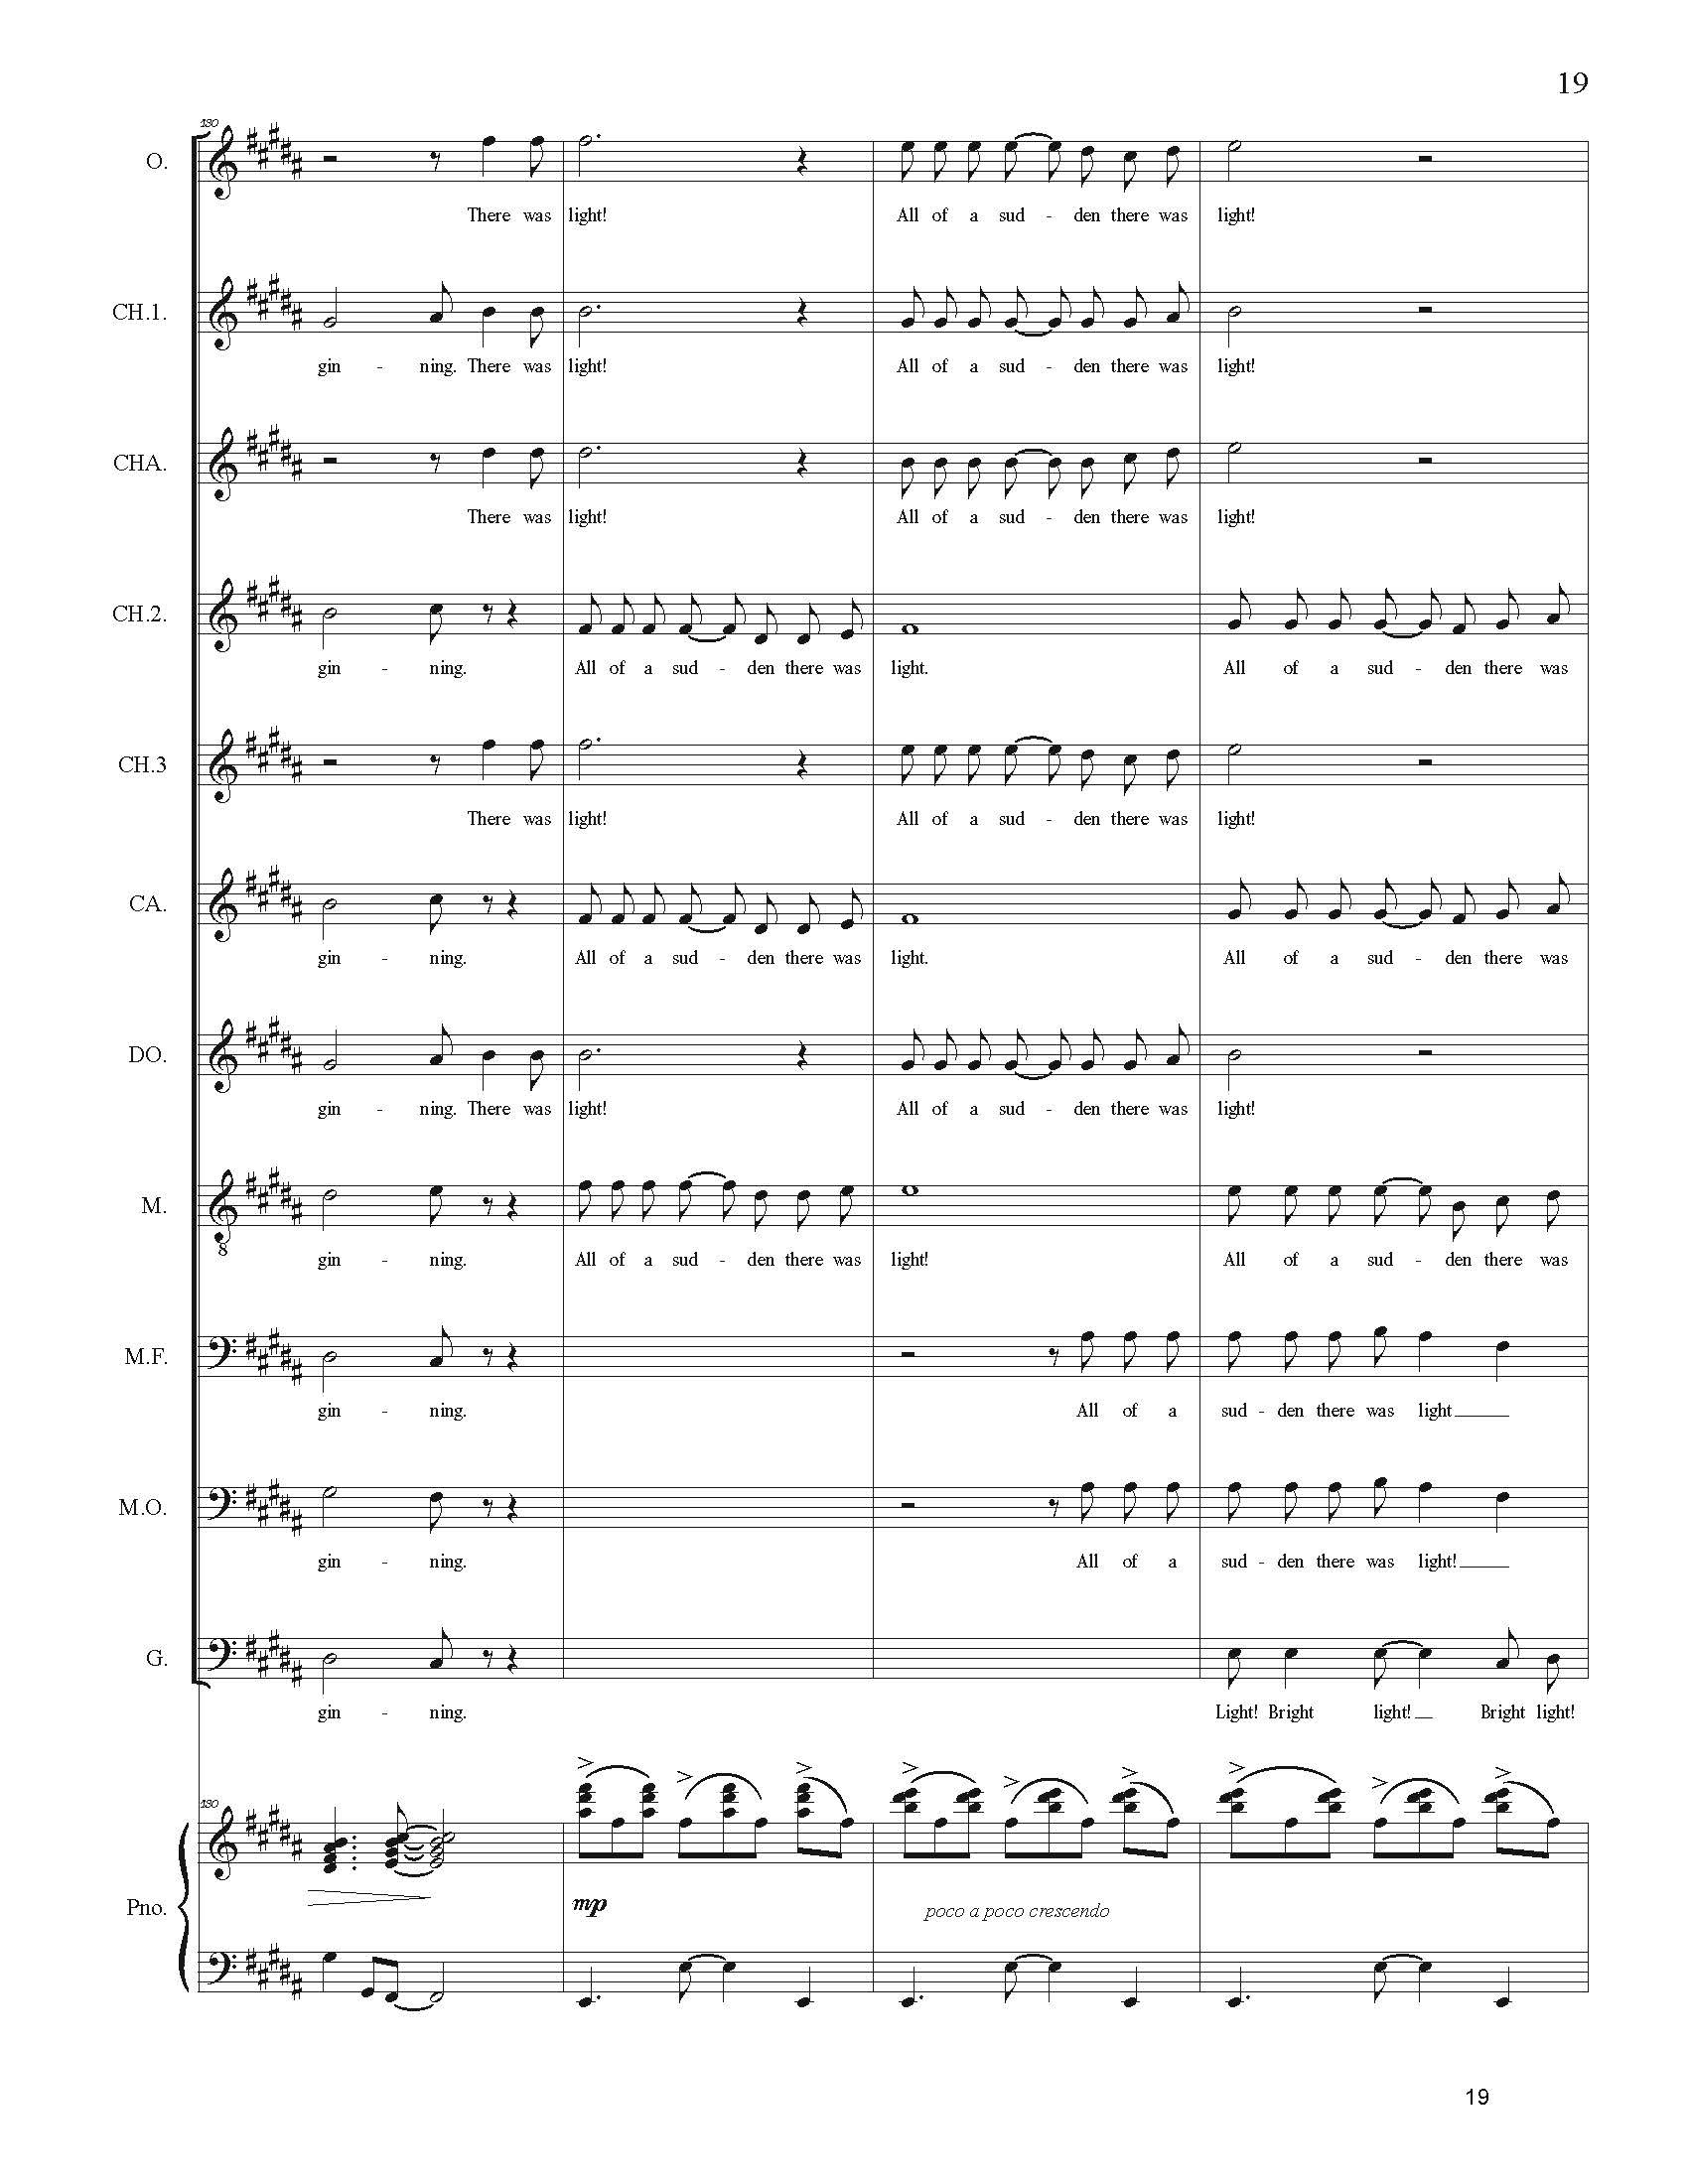 FULL PIANO VOCAL SCORE DRAFT 1 - Score_Page_019.jpg